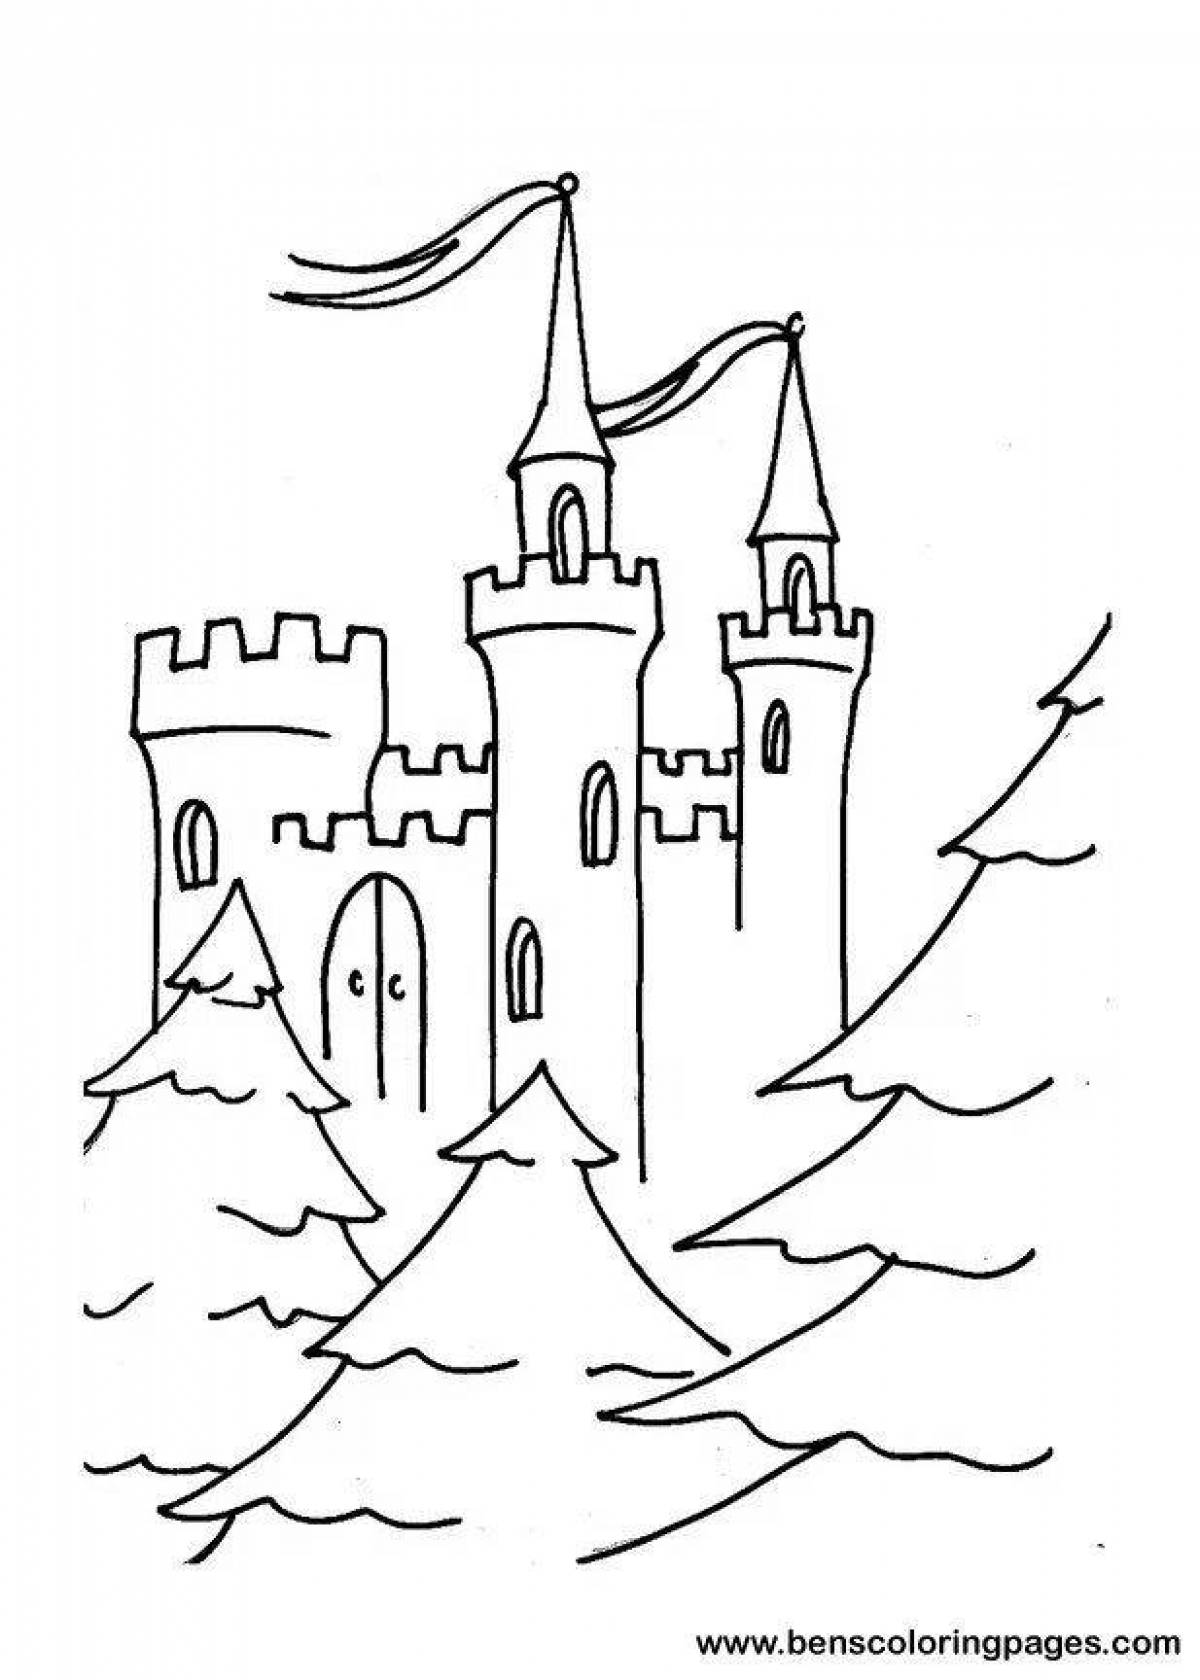 Snow Queen luxury castle coloring book